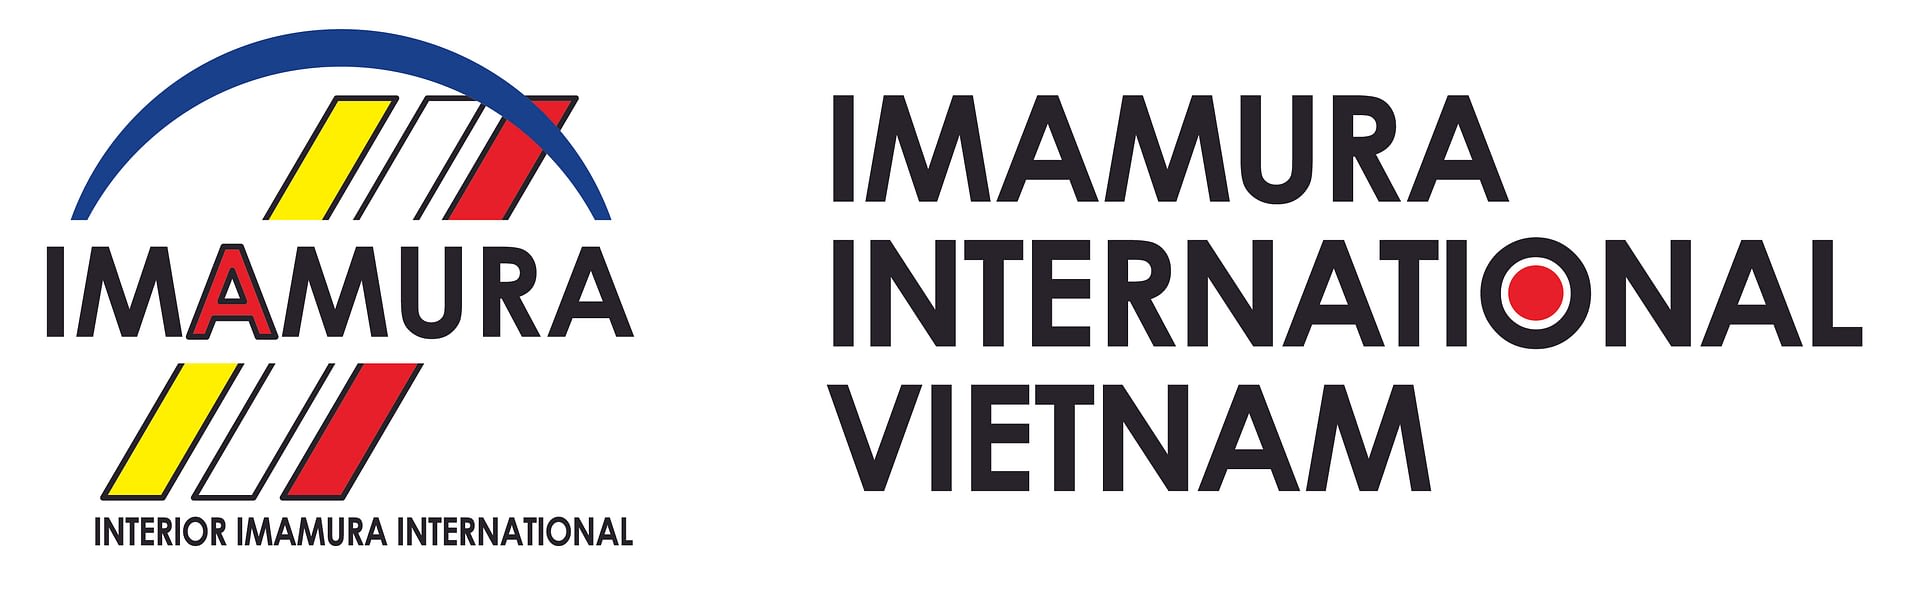 Trang chủ - IMAMURA INTERNATIONAL VIETNAM